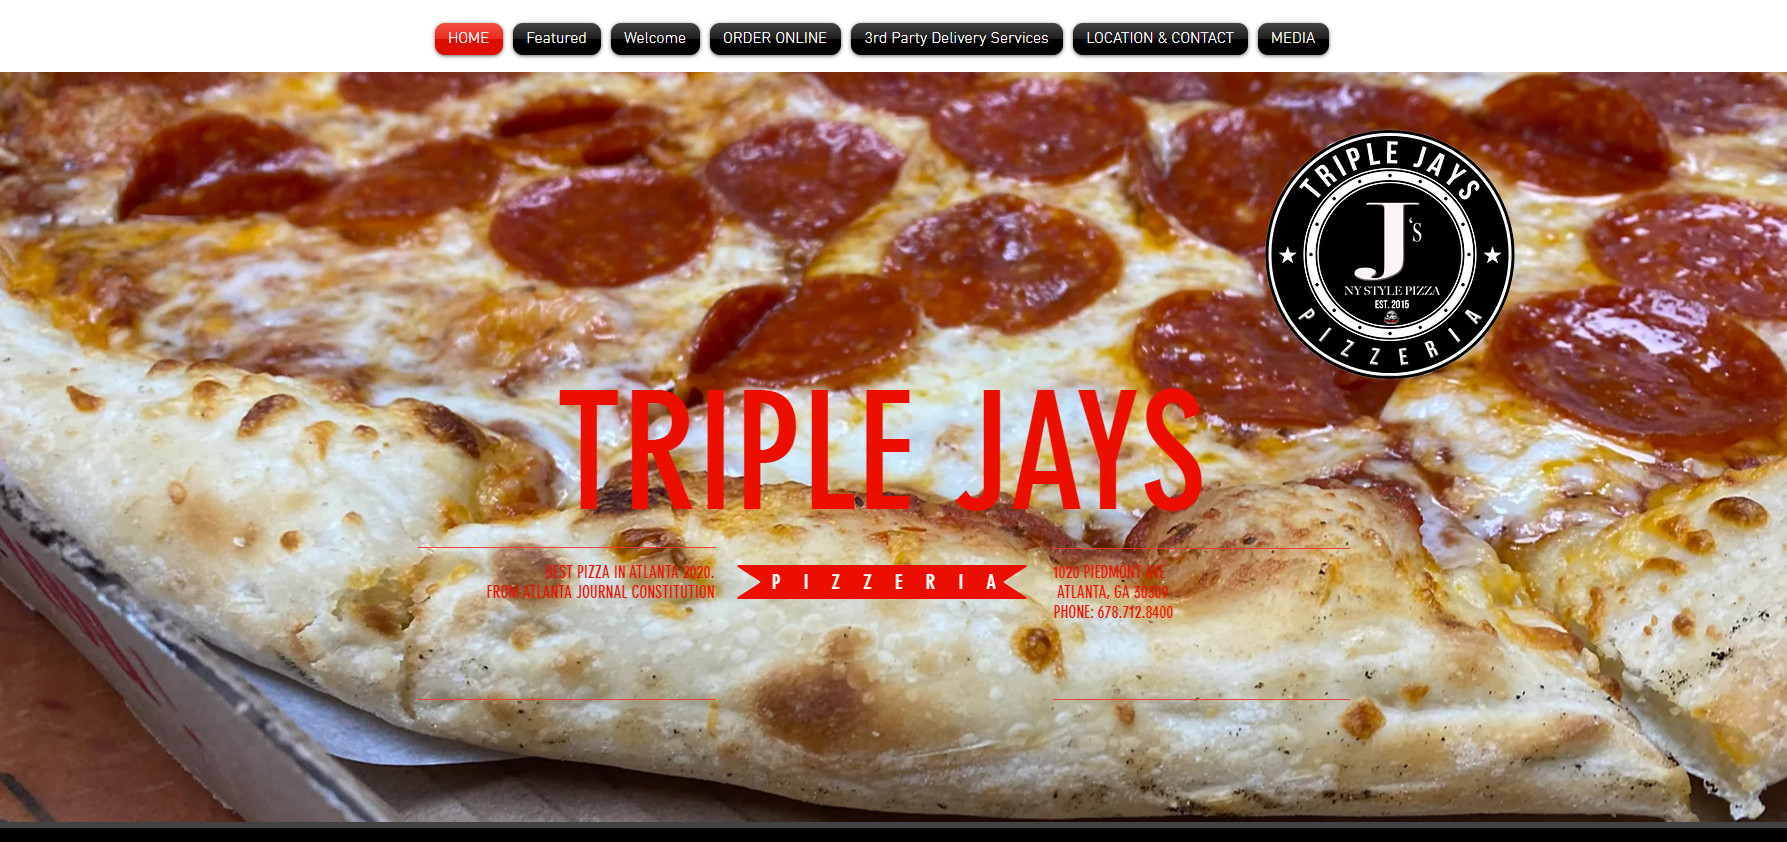 12 food truck websites example Triple Jay's Pizza